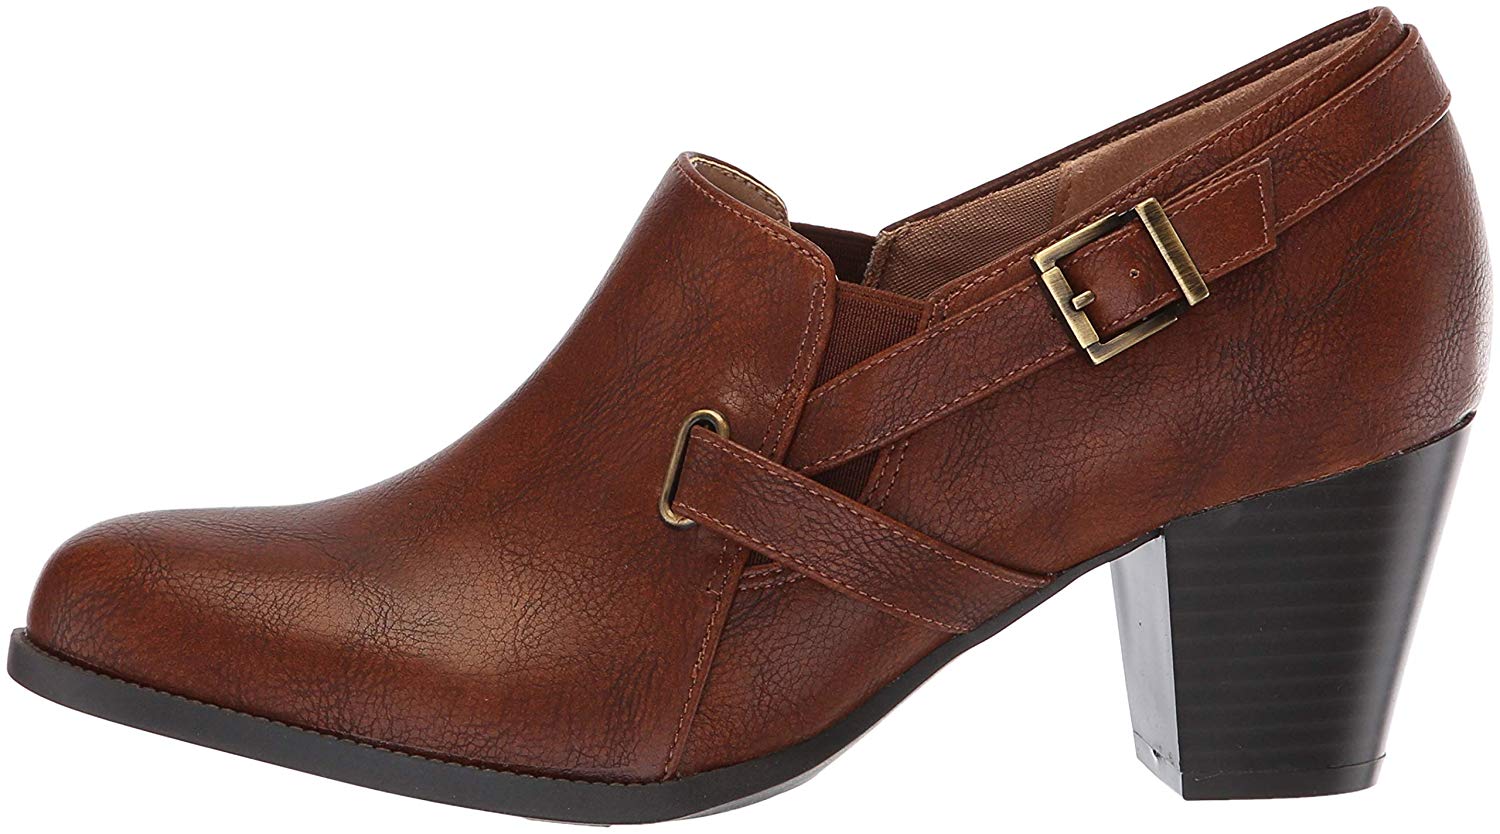 LifeStride Women's Jenson Ankle Boot, Brown, Size 10.0 BGMe | eBay